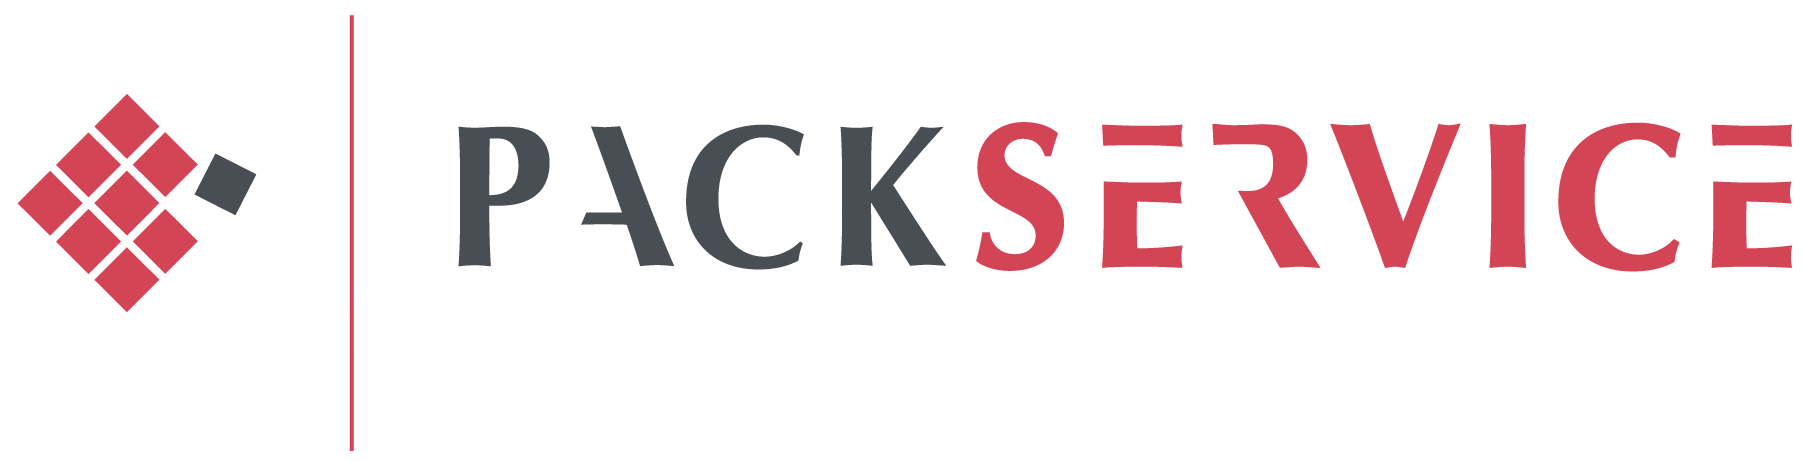 Packservice PS Marketing  GmbH_logo